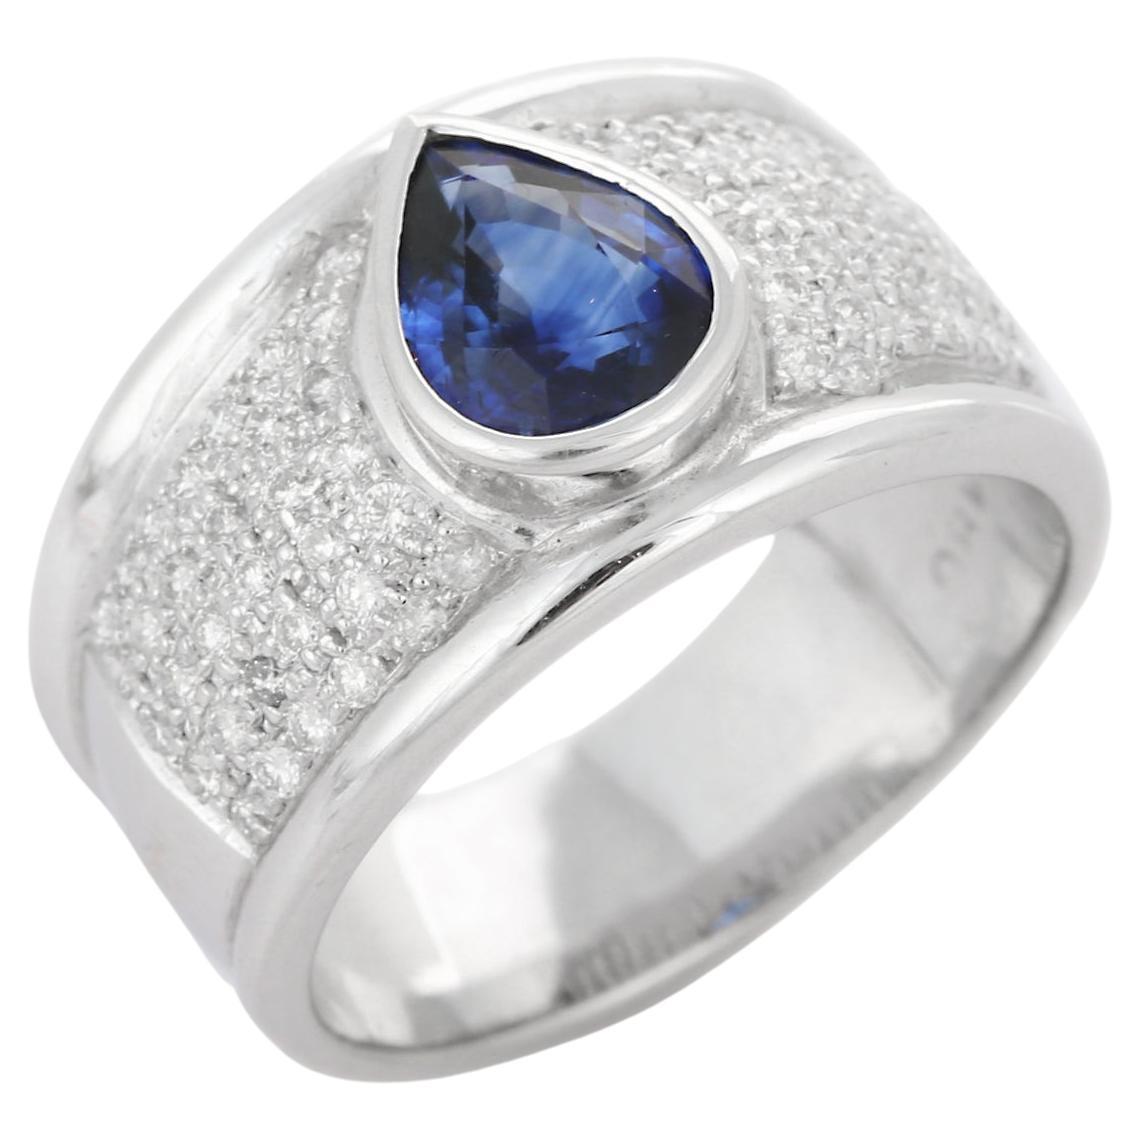 Glamarous Blue Sapphire Diamond Cocktail Ring for Mens in 18k White Gold